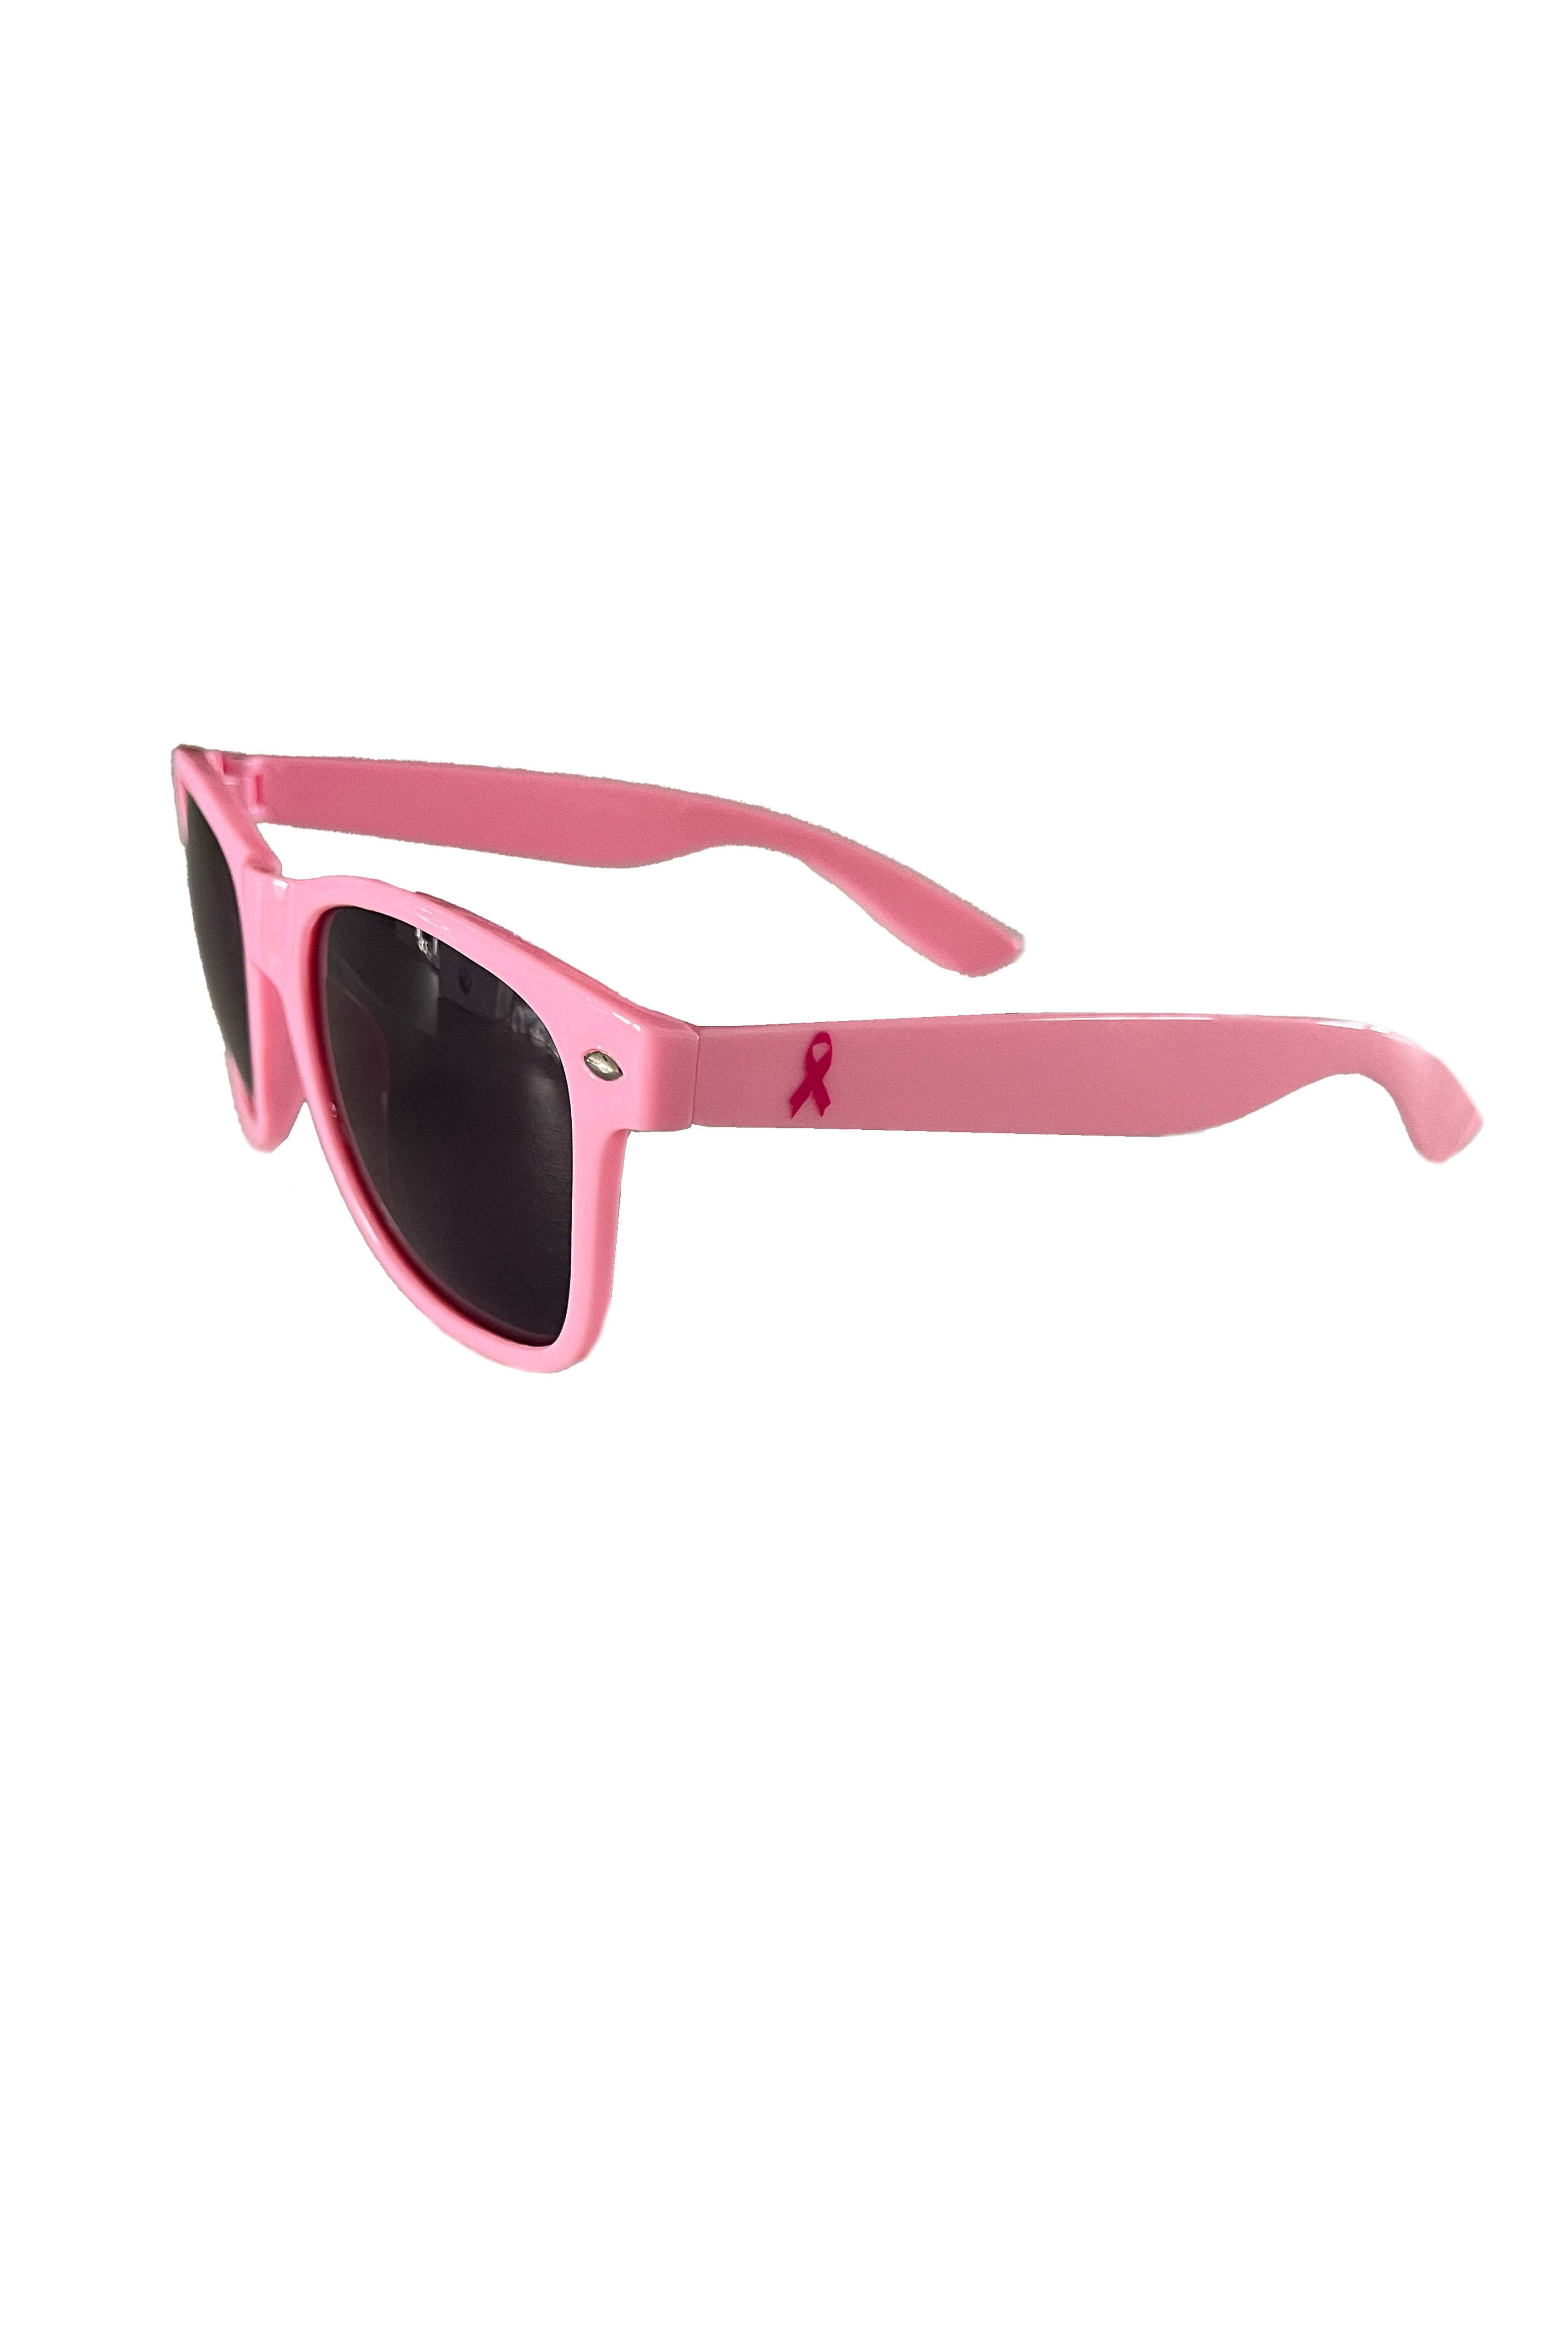 7110 - Pink Ribbon Sunglasses